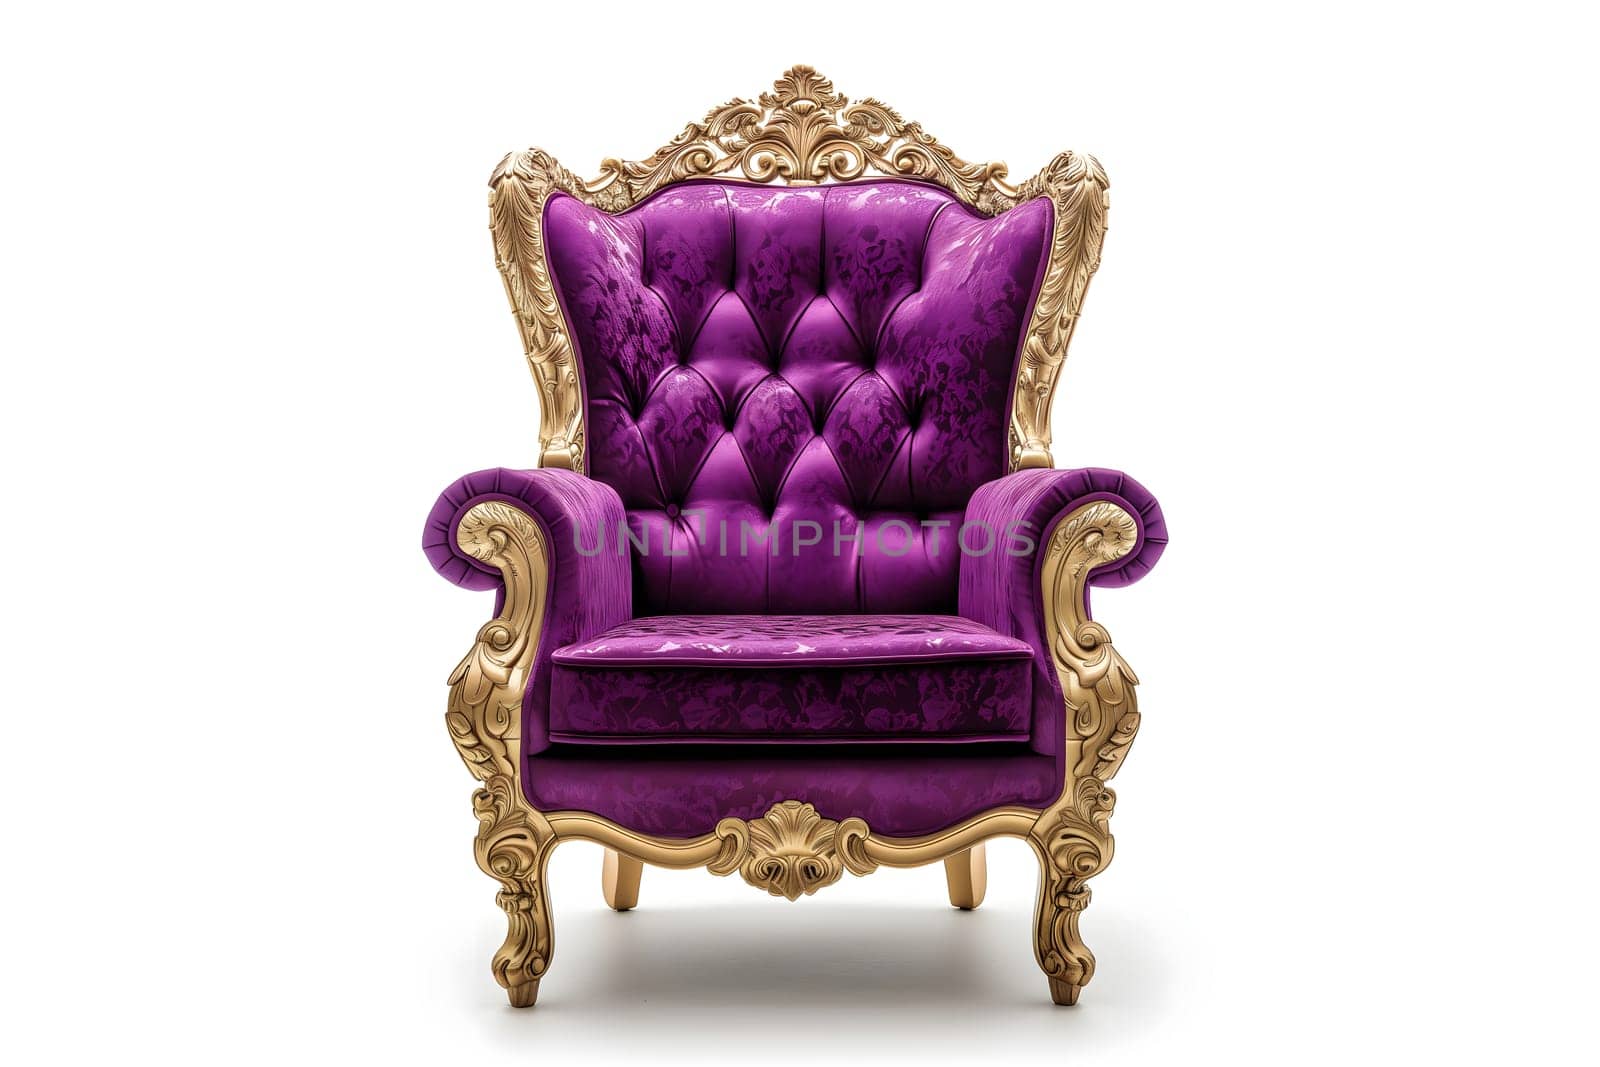 Purple velvet capitonner technique armchair on white background by z1b